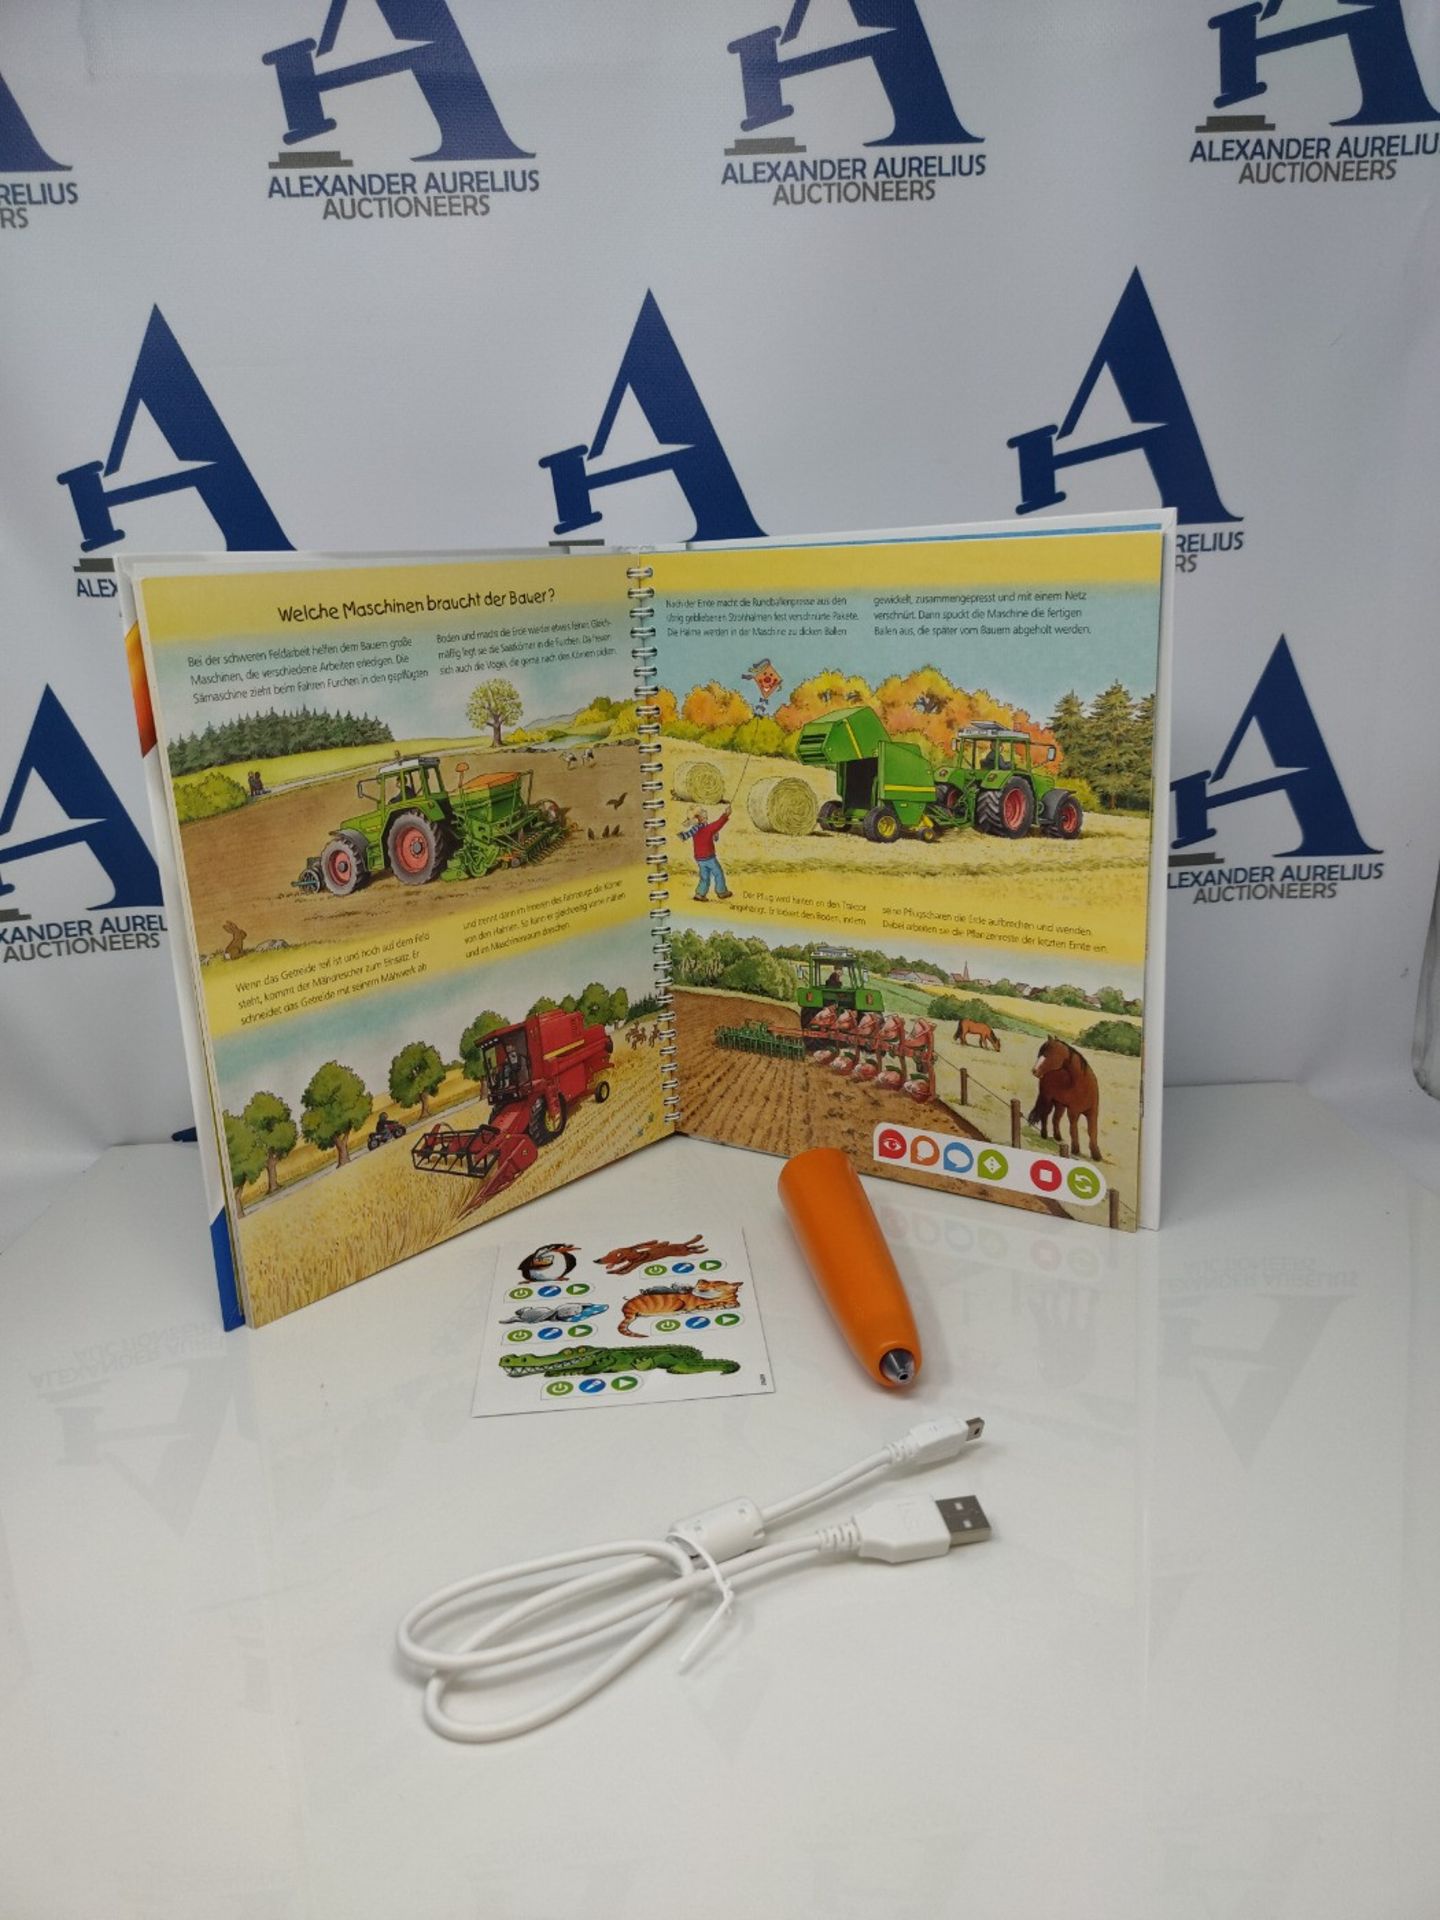 Ravensburger tiptoi starter set 00804: pen and farm book - learning system for childre - Image 3 of 3